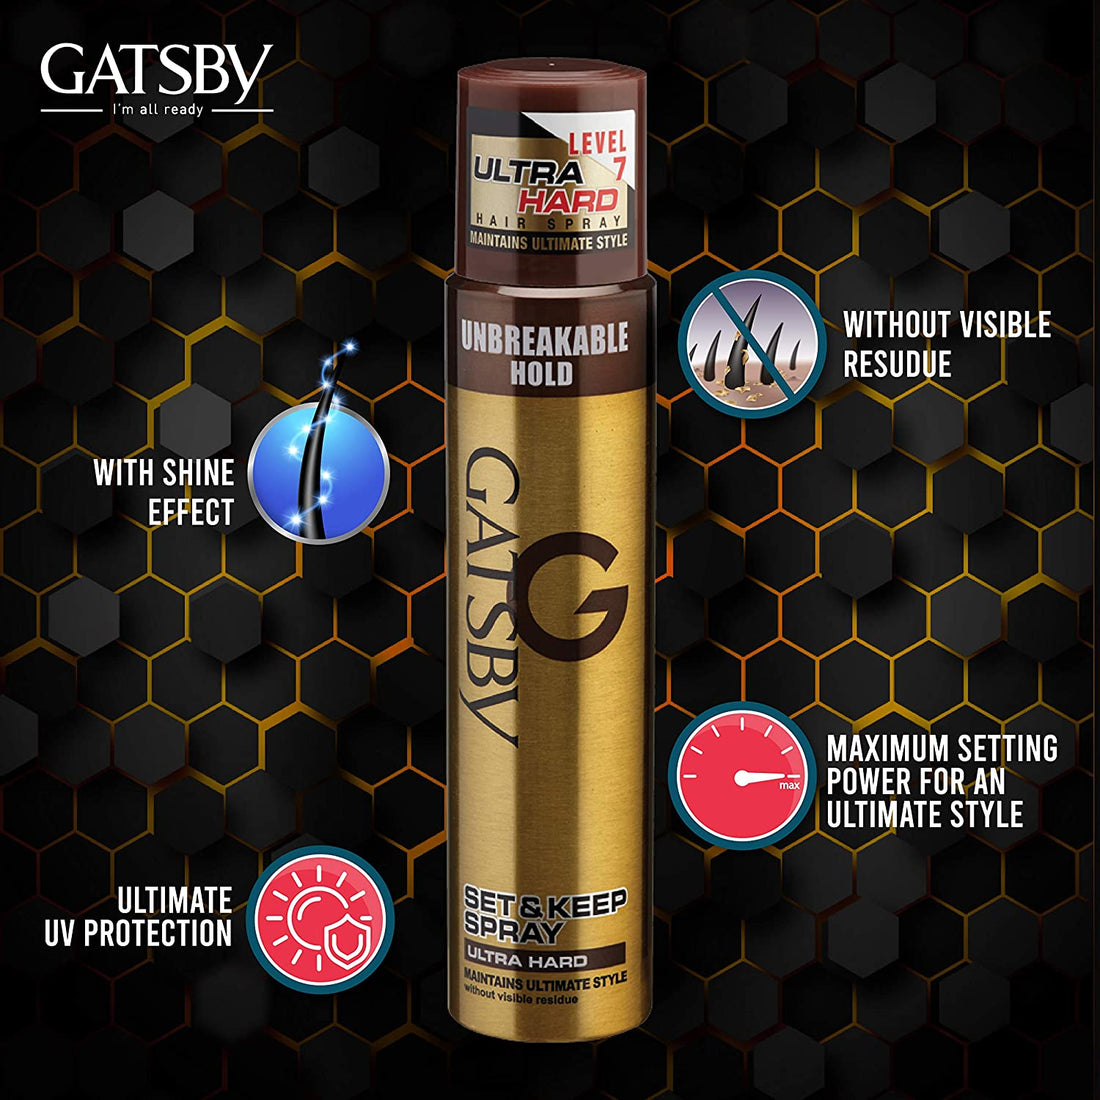 Gatsby Set Unbreakable Set & Keep Spray Ultra Hard Maintains Ultimate Style 250ml